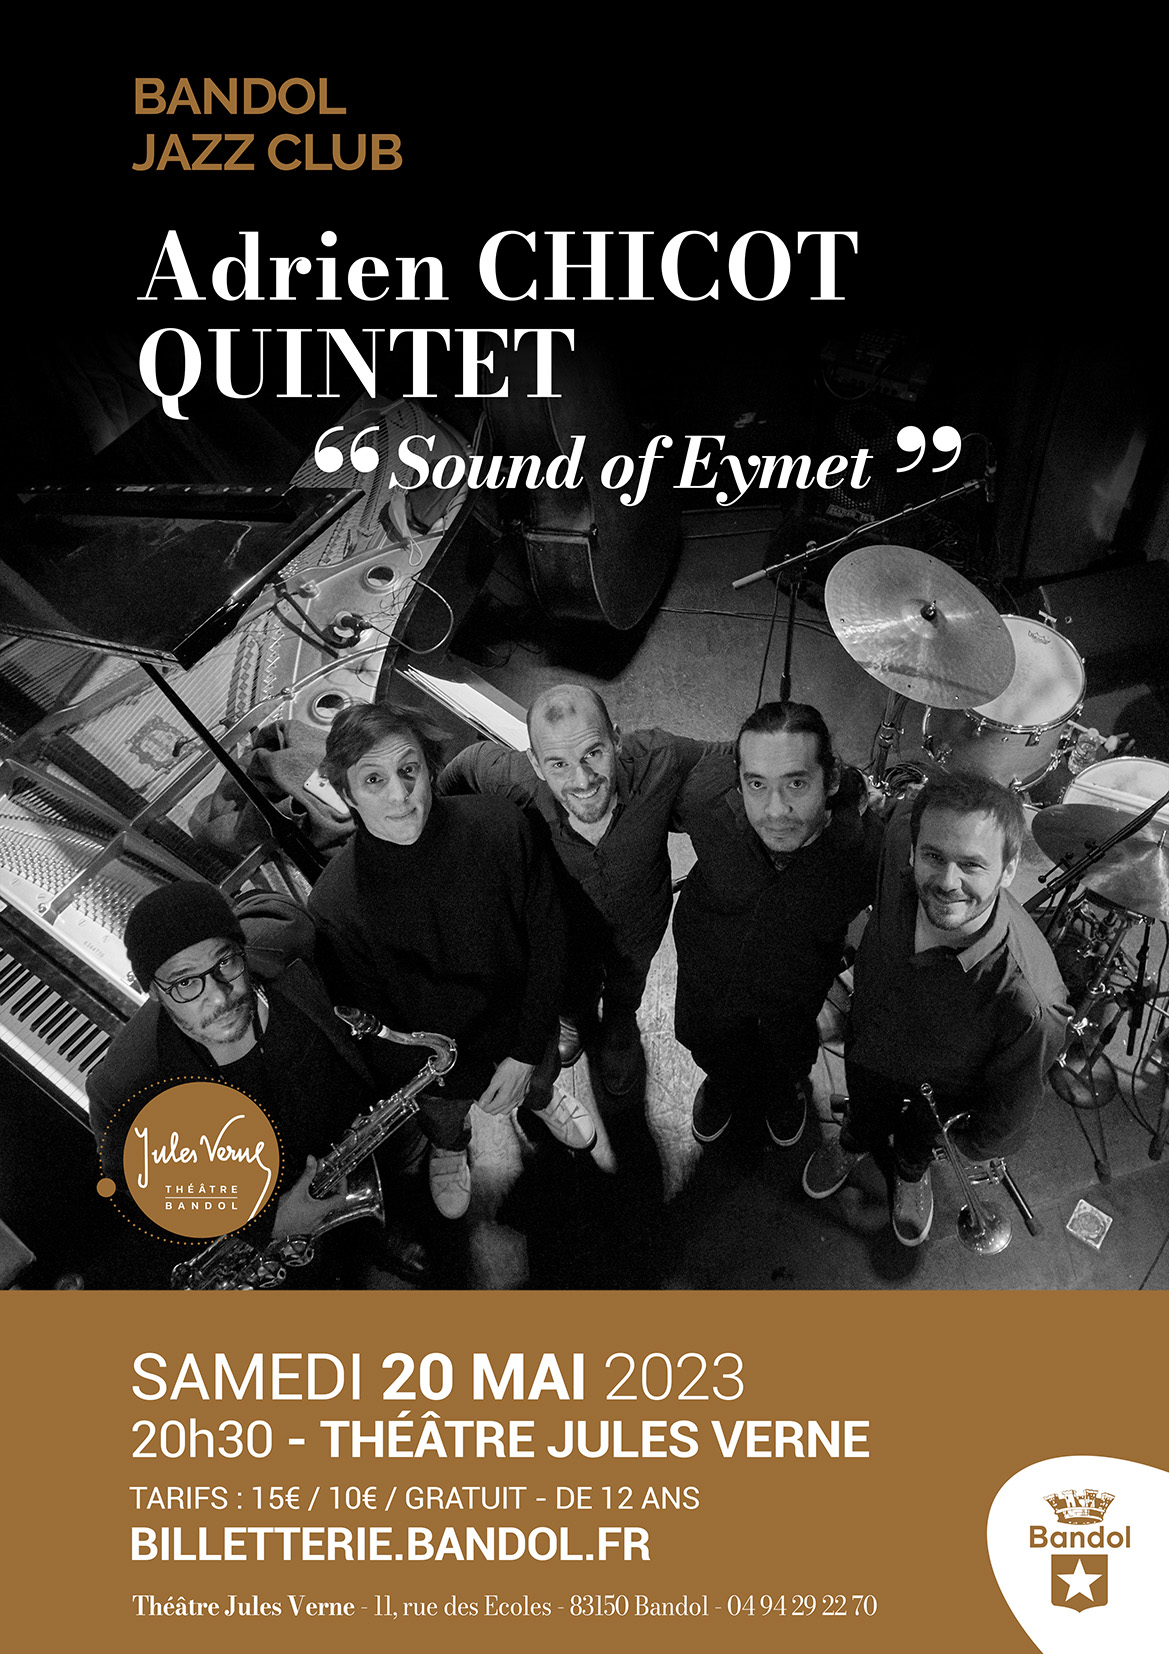 Adrien chicot quintet V1